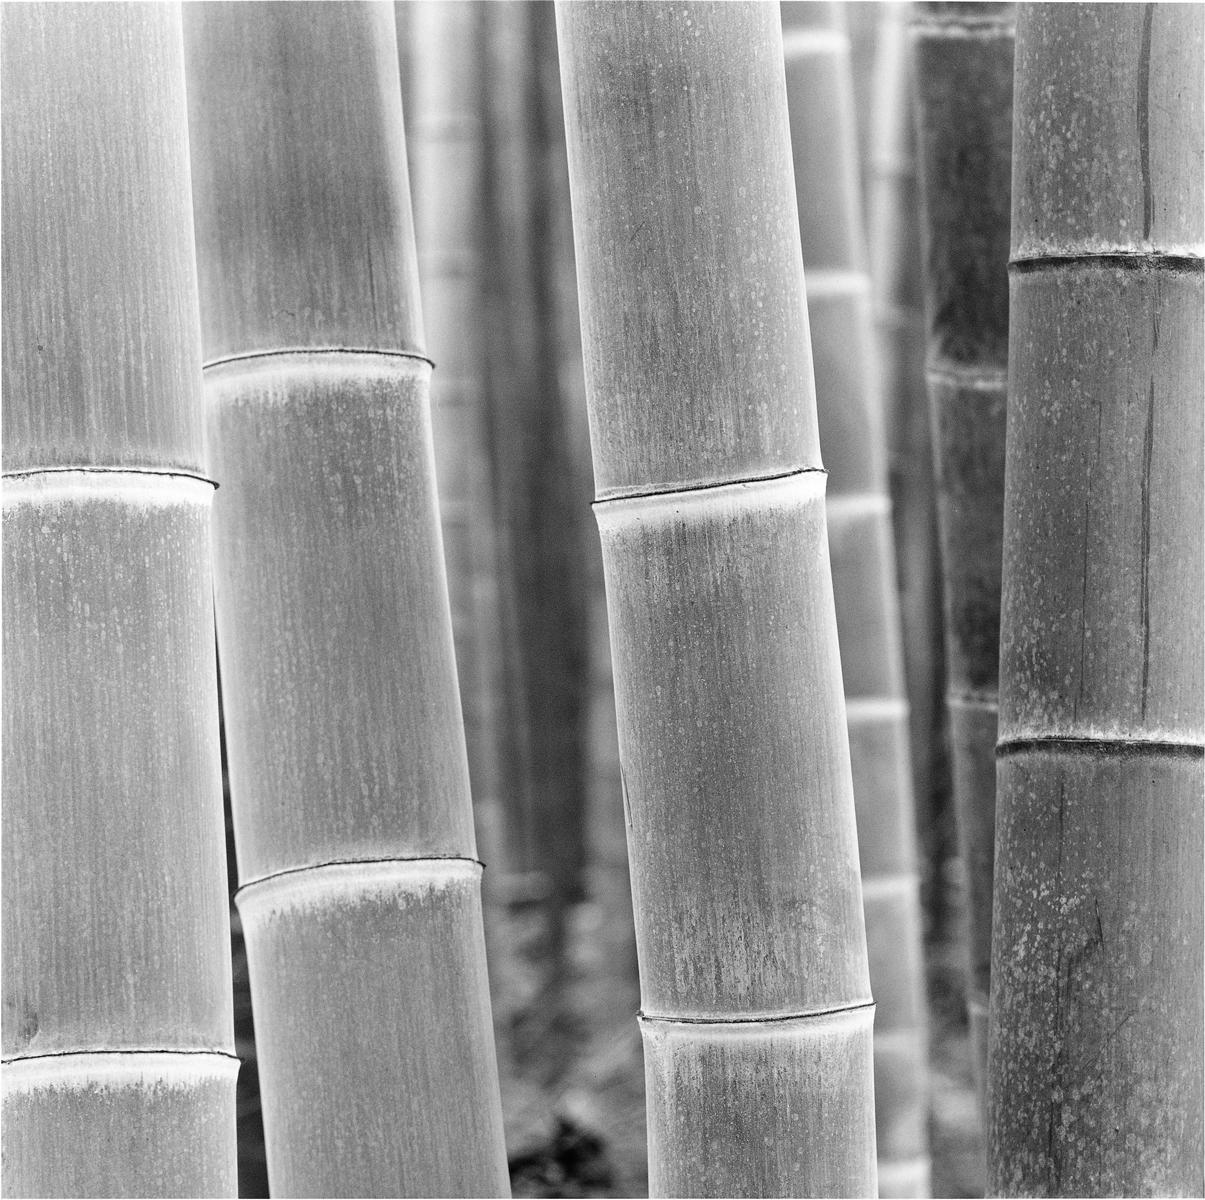 #bamboo #daesoo kim #black and white photo #gelatin silver #zone system #ansel adams / #대나무 #선비 정신 #김대수 #흑백 사진 #은염프린트 #젤라틴실버 #존시스템 #안셀 아담스 / #탄은 #이정 #사군자 #매난국죽